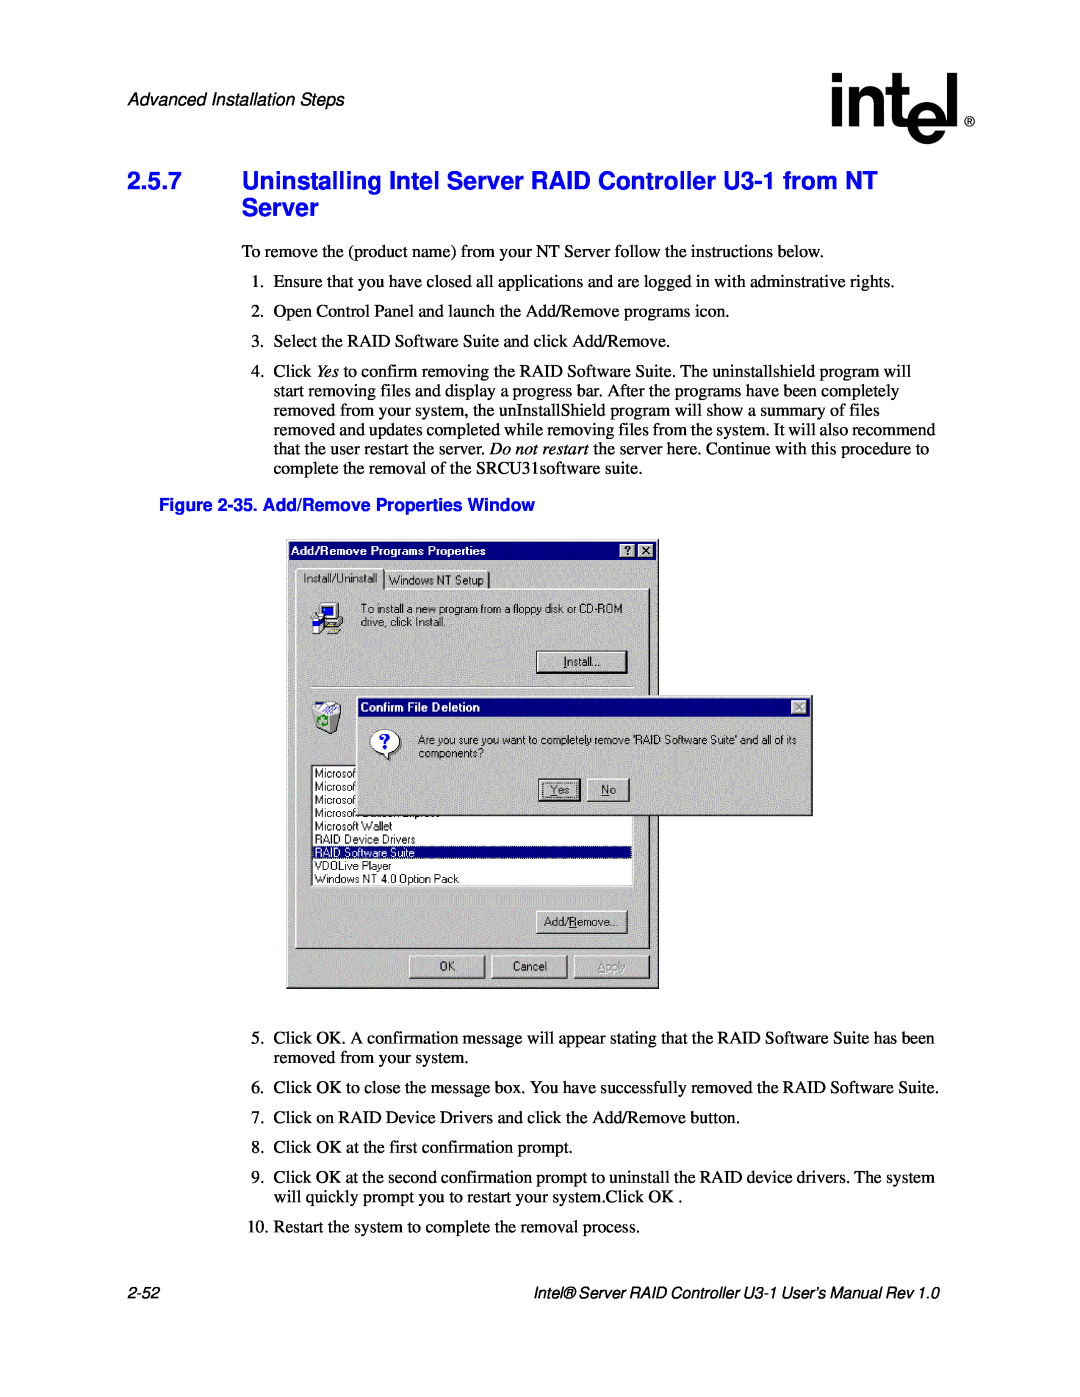 Intel SRCU31 user manual Advanced Installation Steps, 35.Add/Remove Properties Window 